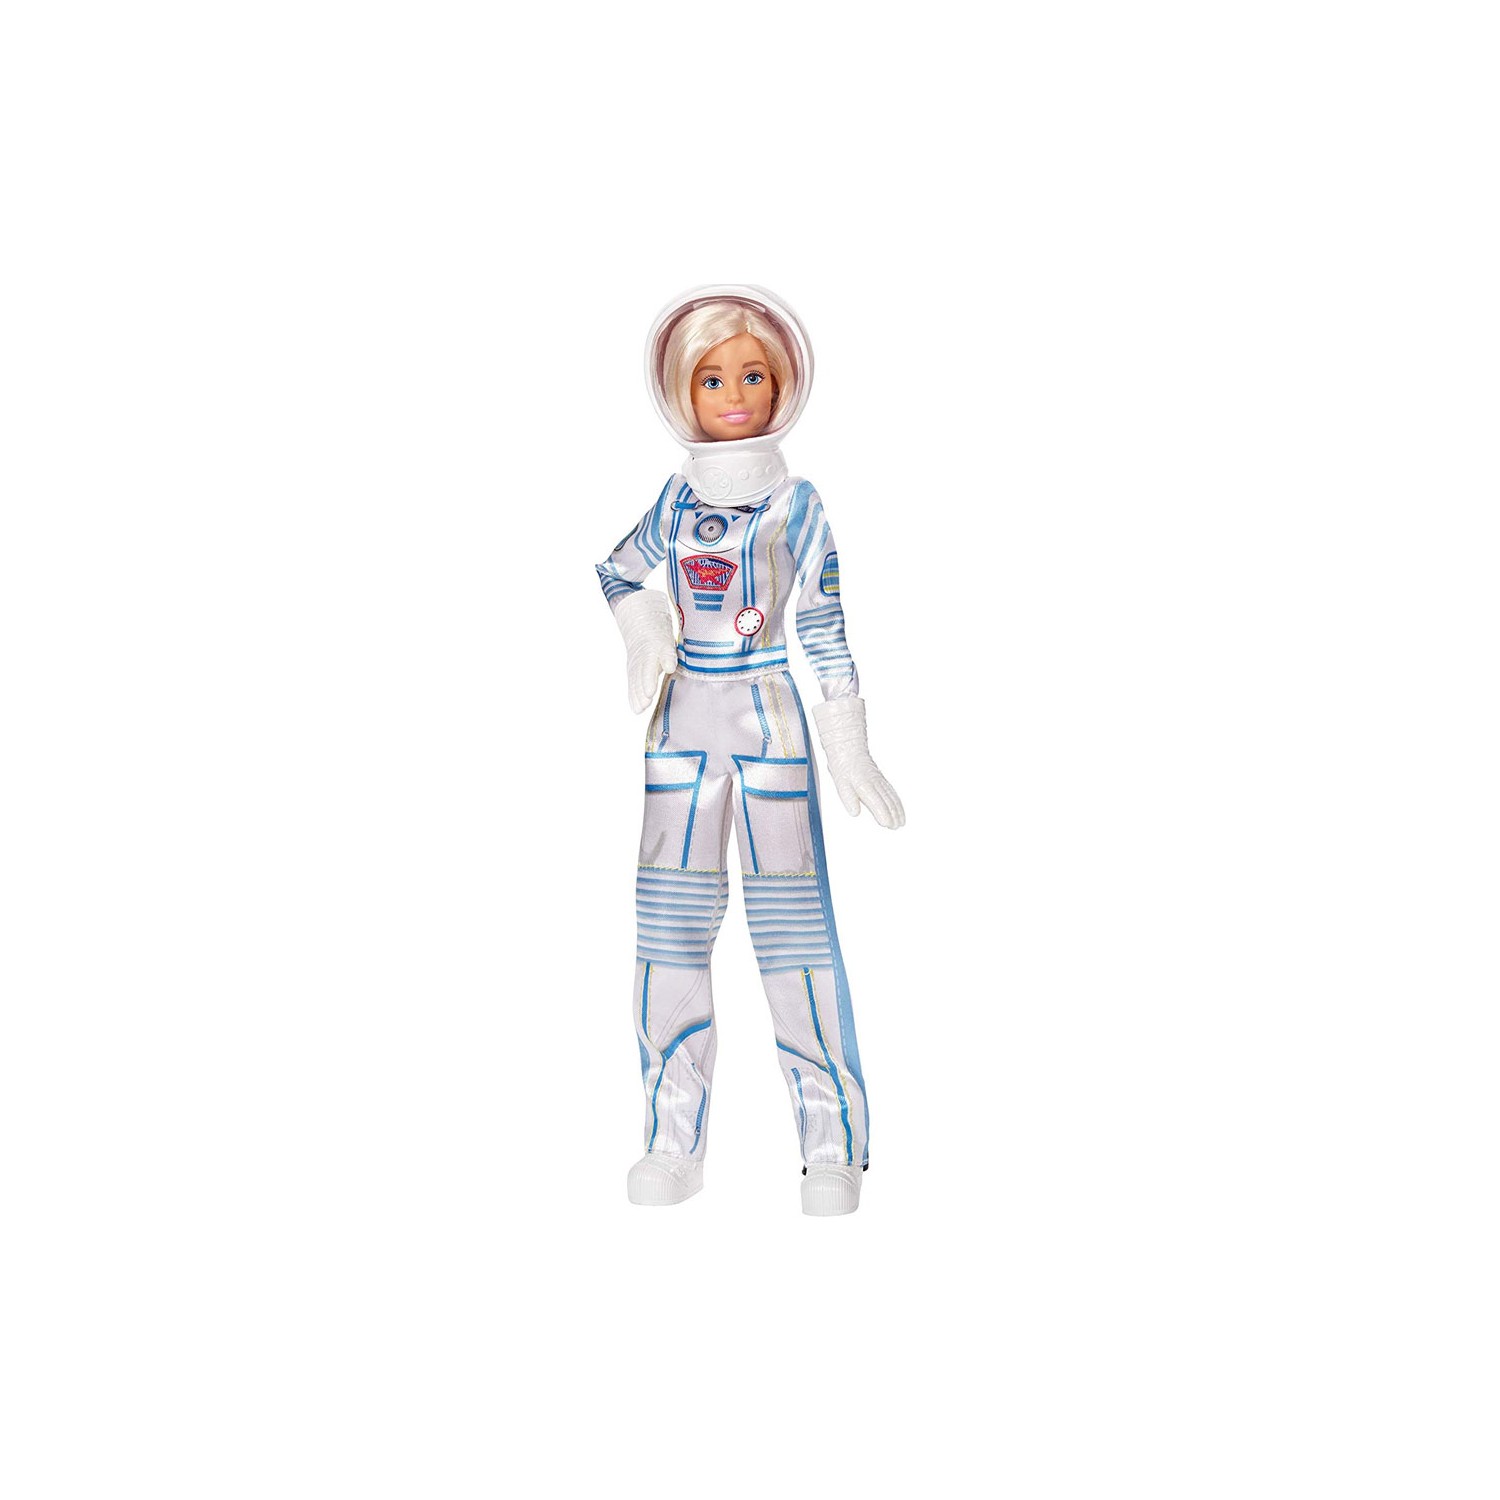 Кукла Barbie You Can Be Anything - космонавт кукла barbie 60th anniversary barbie алмазный юбилей барби fxd88